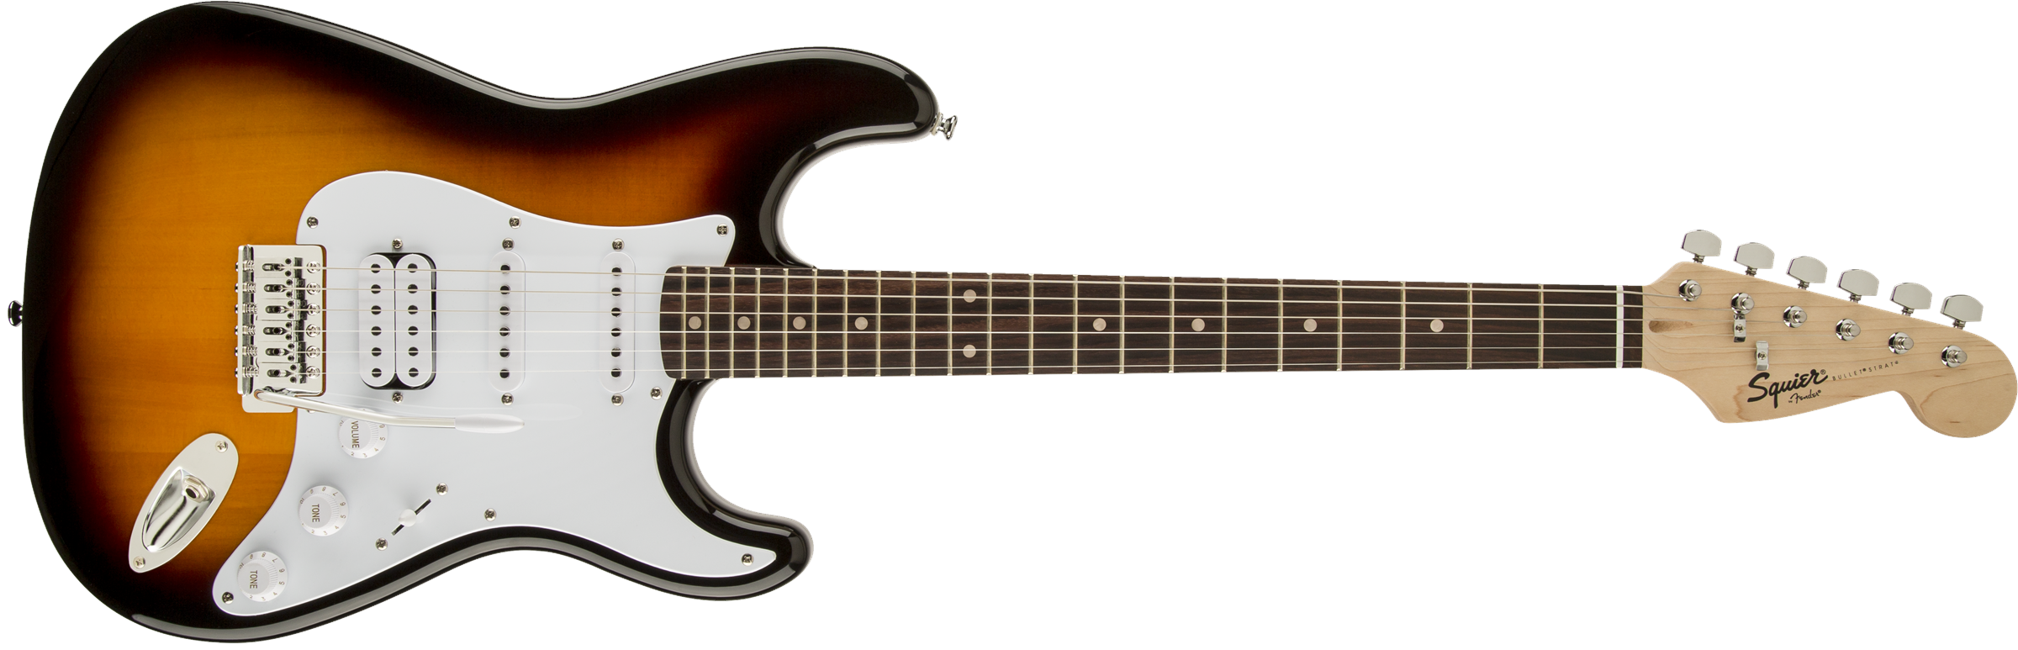 Squier By Fender - Bullet HSS Stratocaster - Elektrisk Guitar (Brown Sunburst)